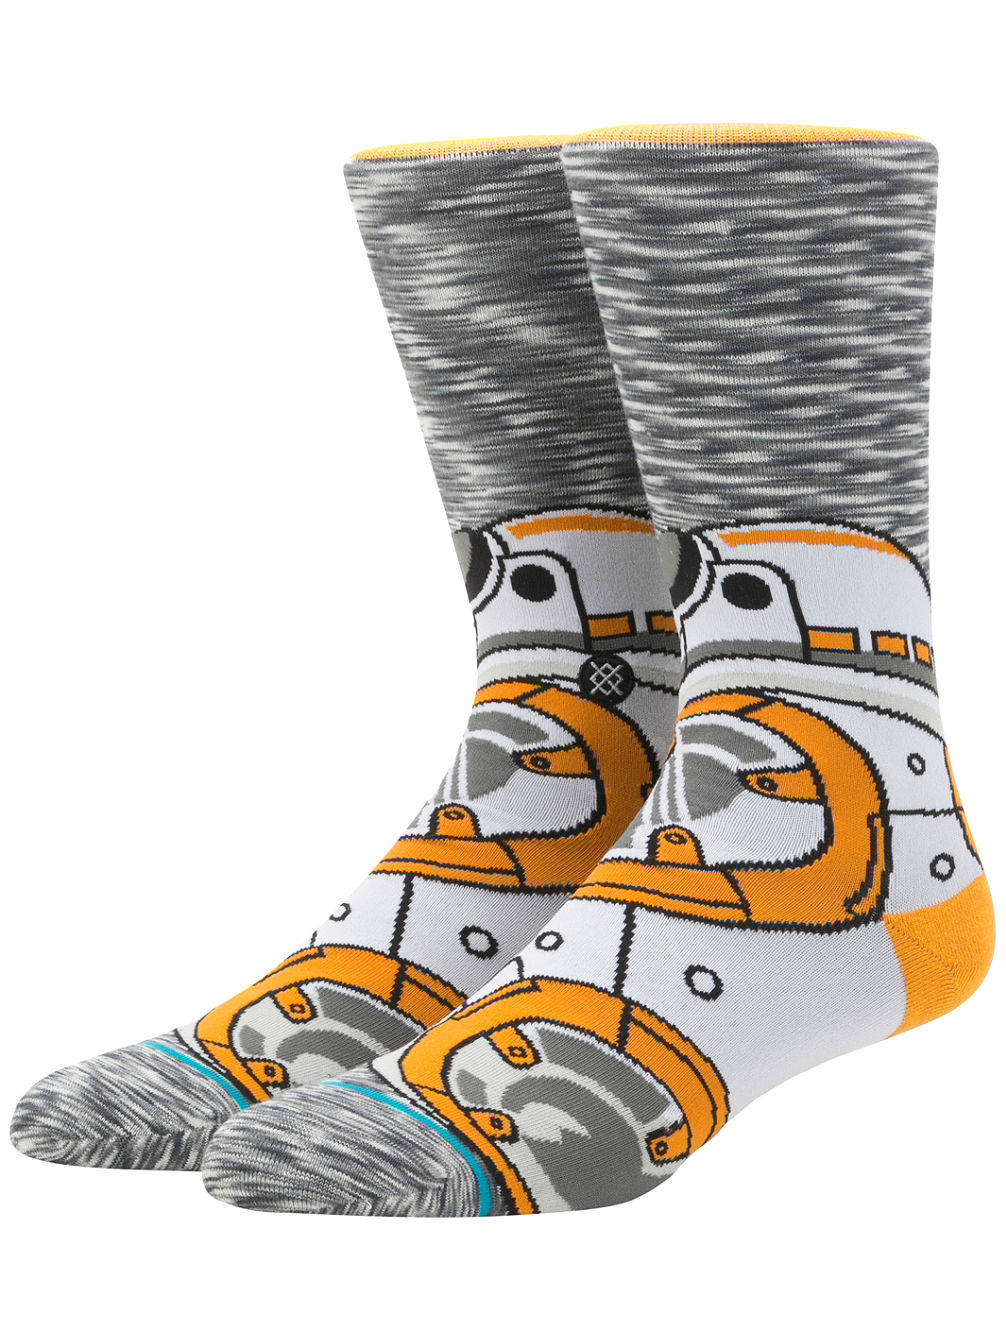 BB-8 Star Wars Chaussettes